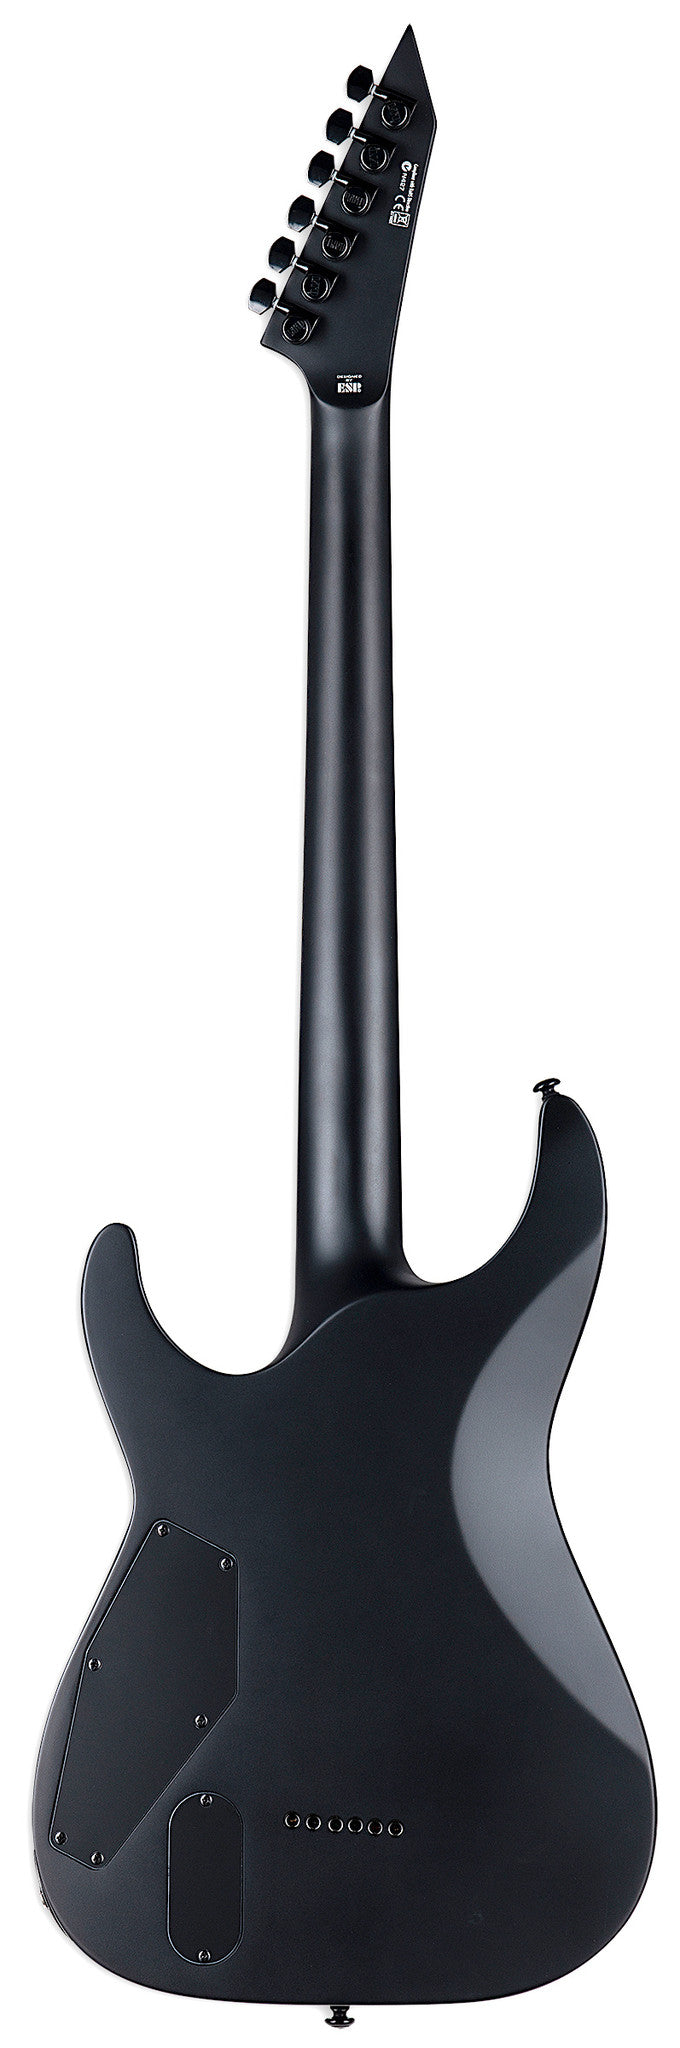 ESP LTD MH-1000 BARITONE Electric Guitar (Black Satin)